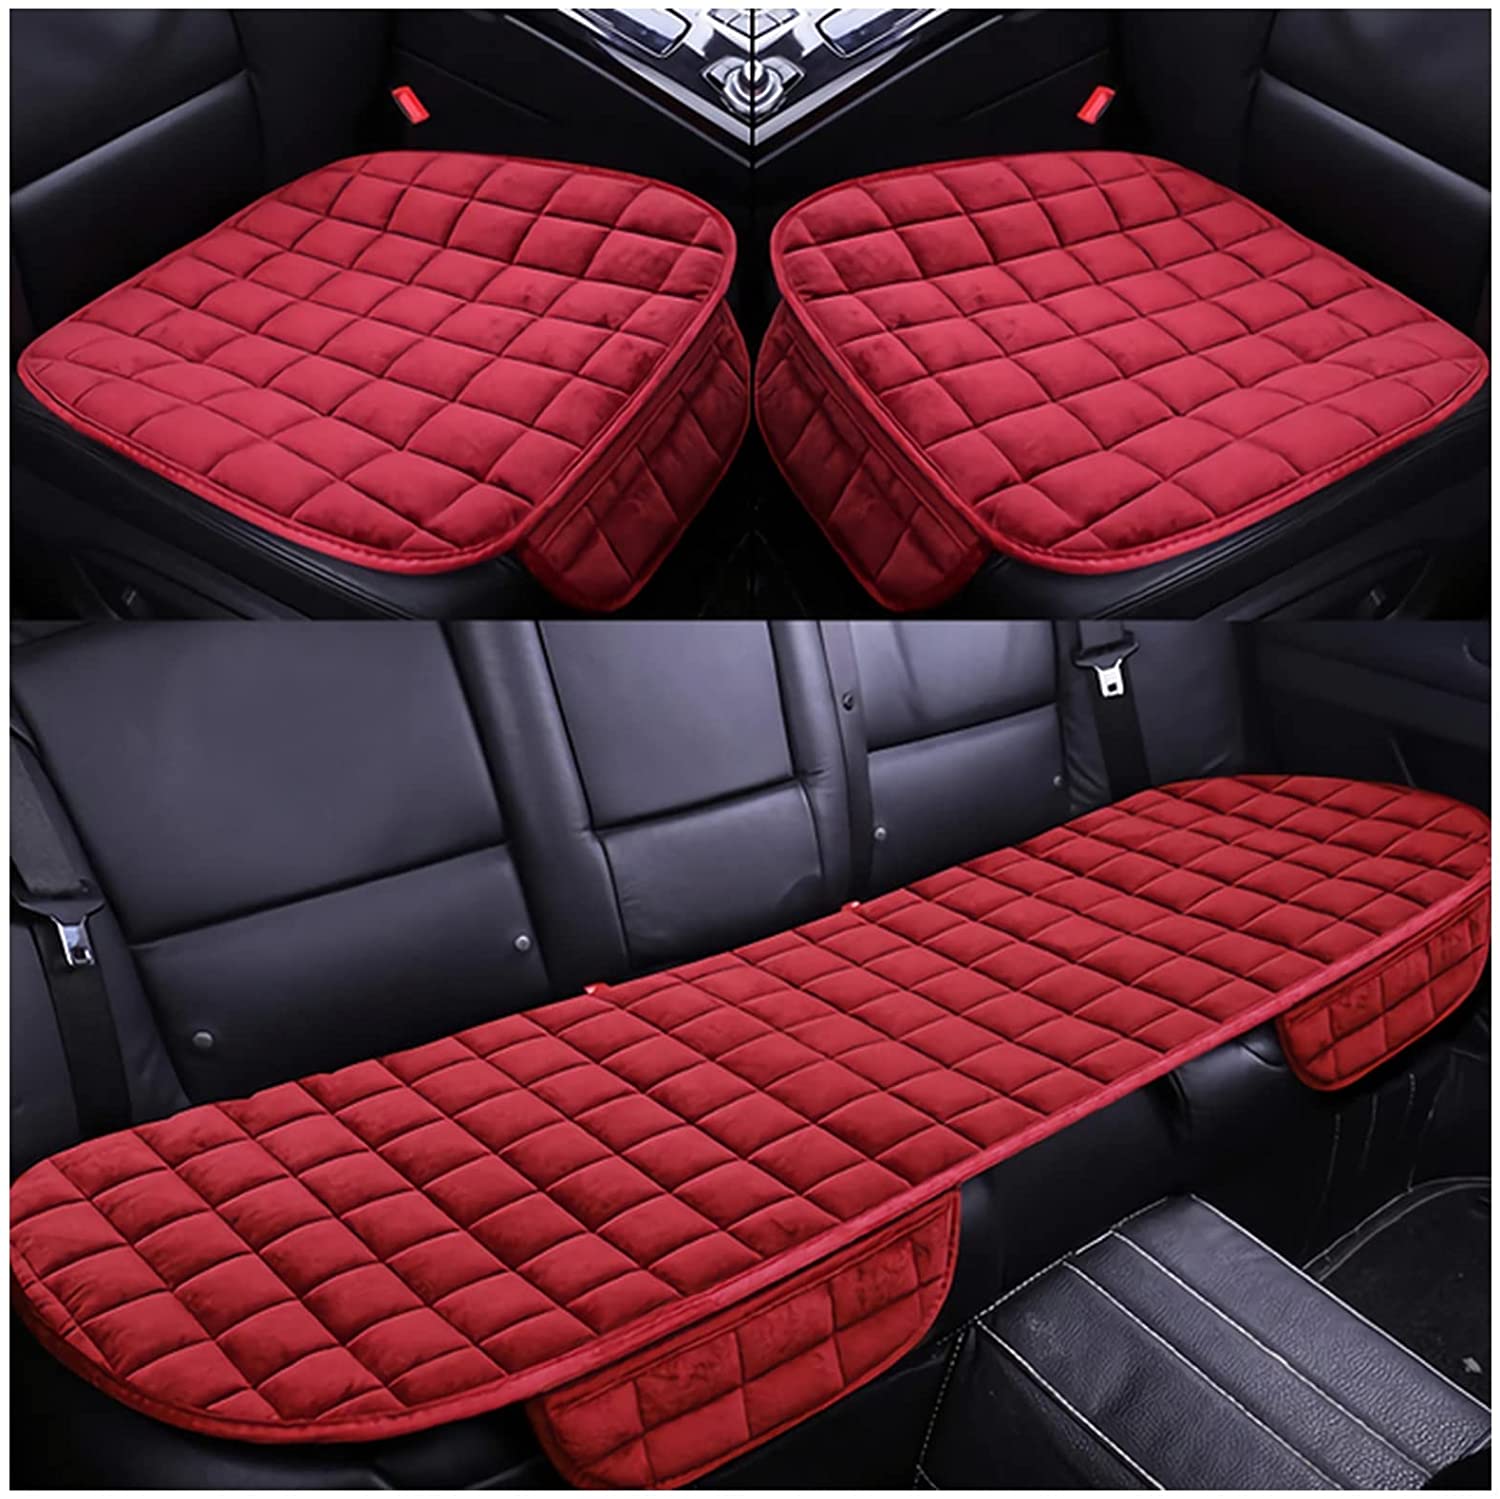 bamutech Seat Cushion Car Seat Cover Fit Truck SUV Van Front Rear Flake Cloth Cushion Non-Slip Winter Car Protector Mat Pad Keep Warm Universal Seat Cushion Chair (Size: Red 3pcs)